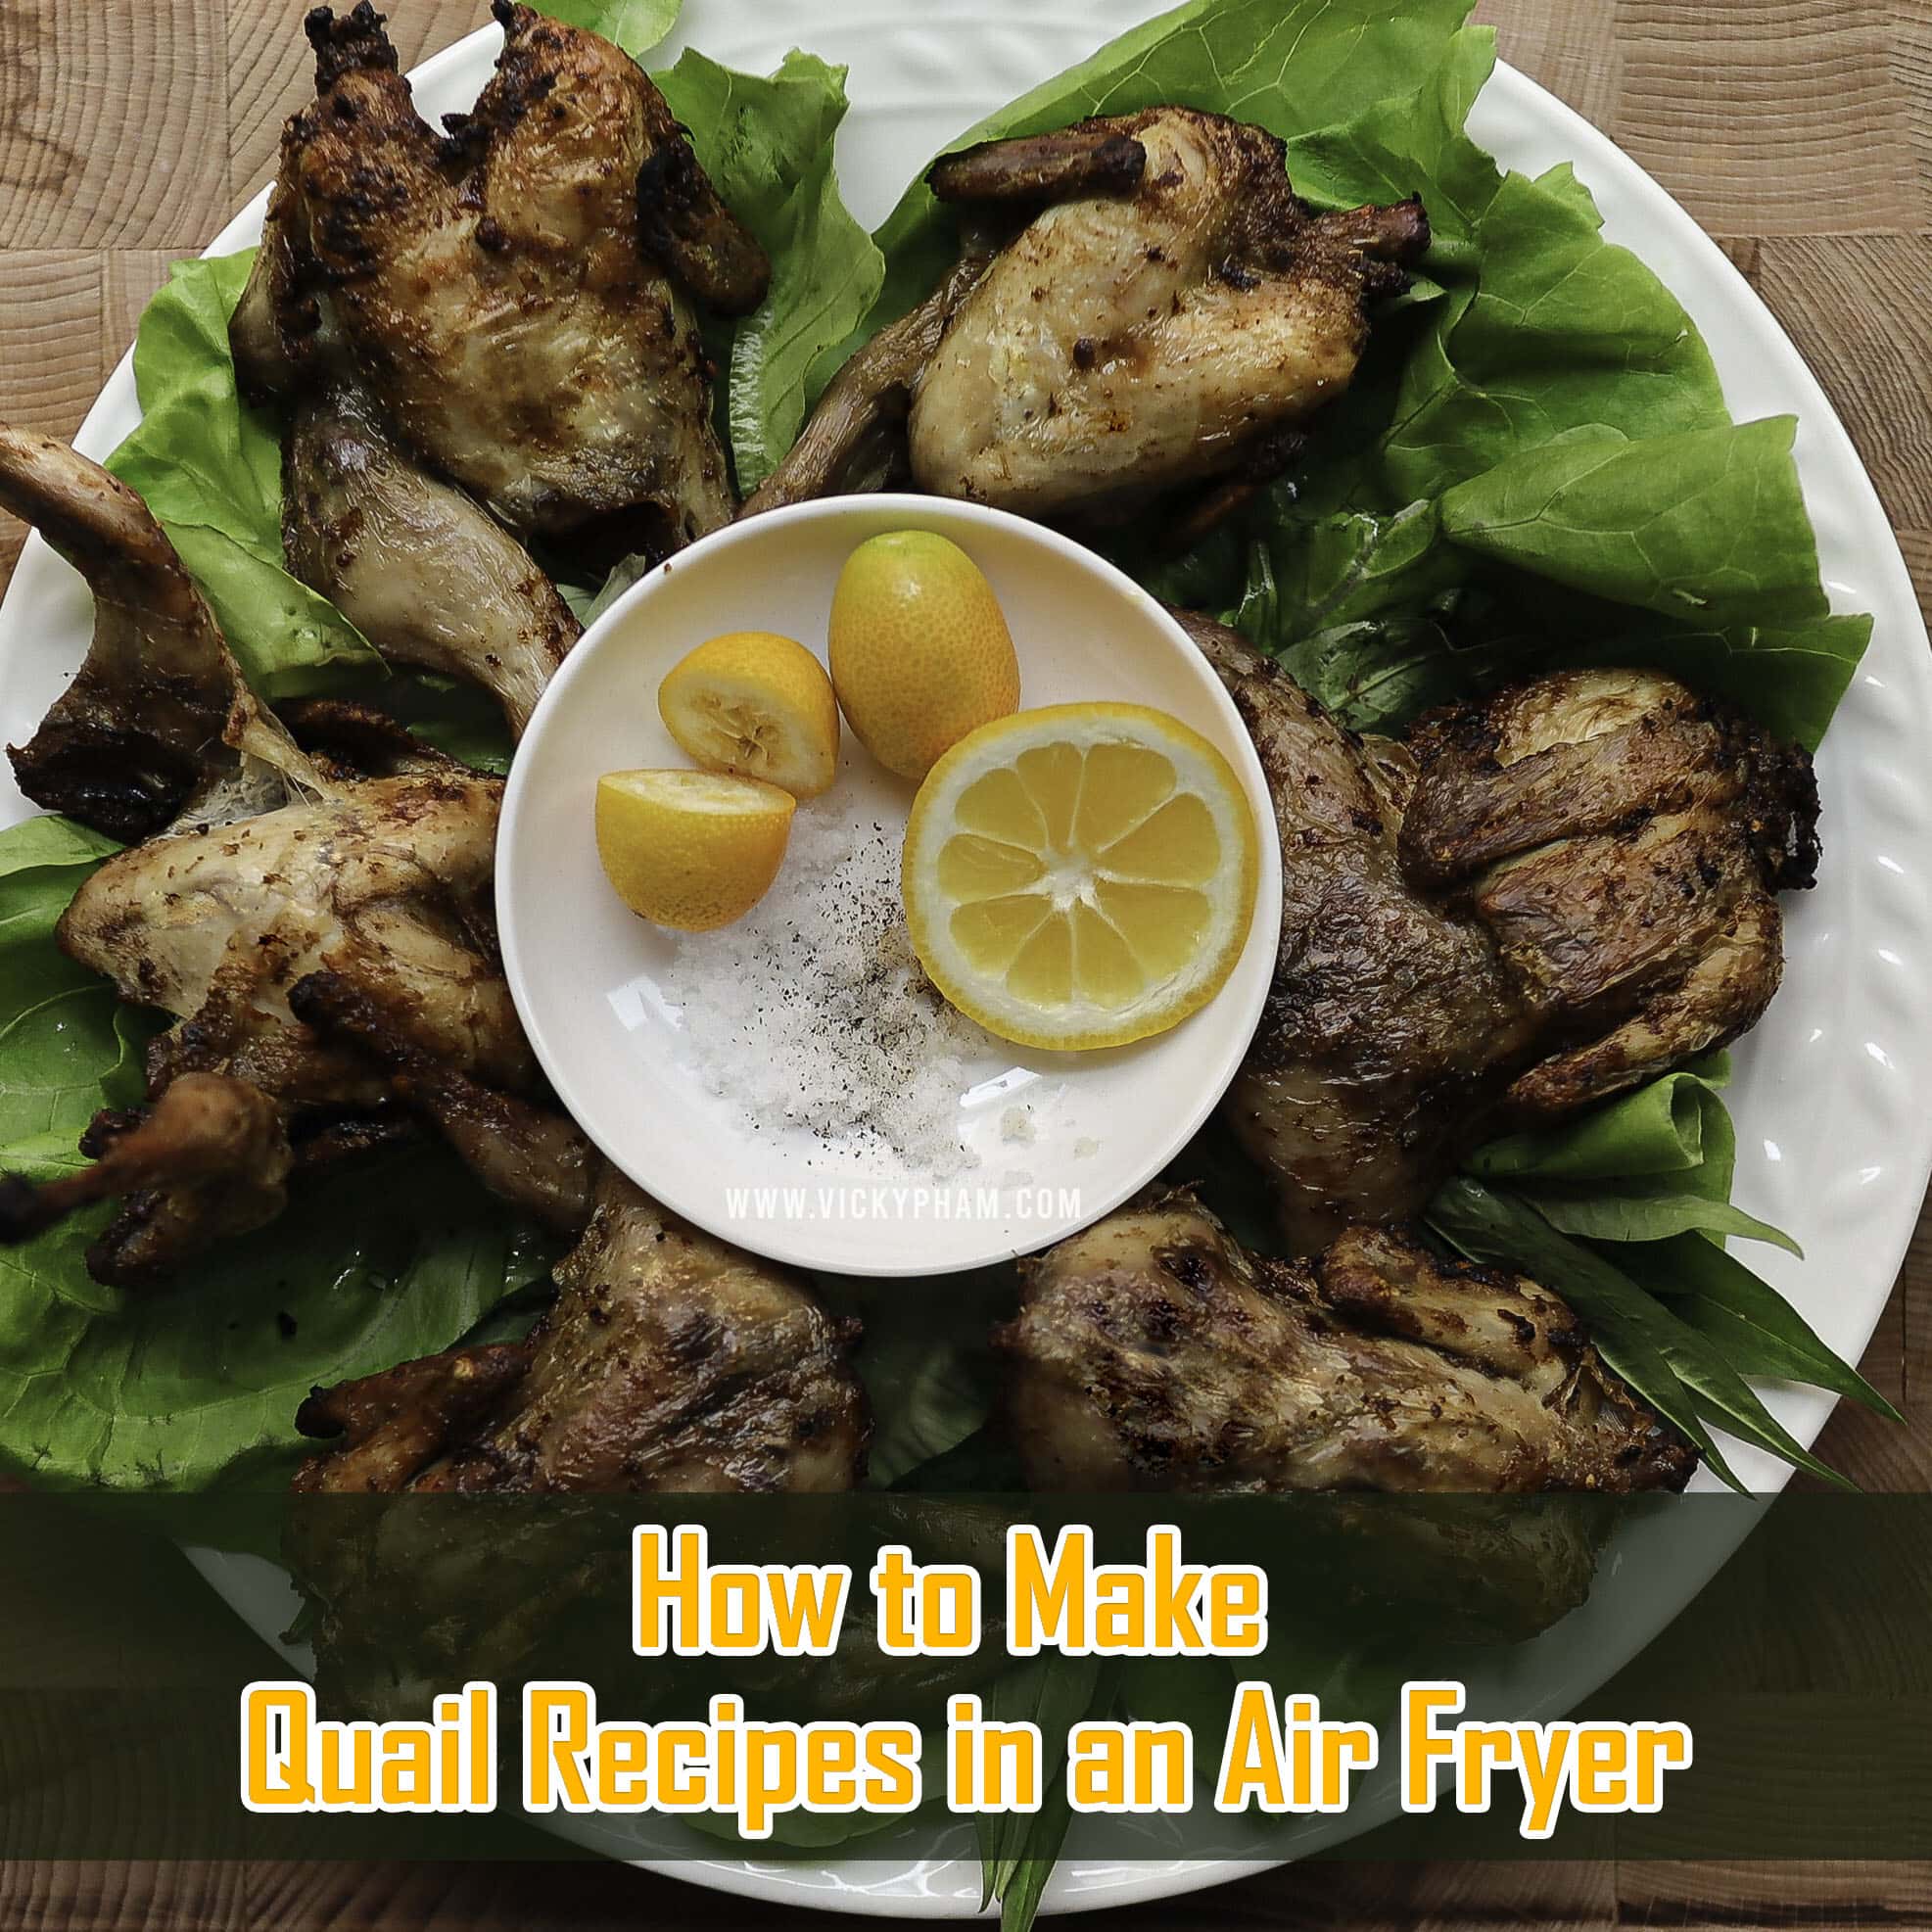 How to Make Quail Recipes in an Air Fryer